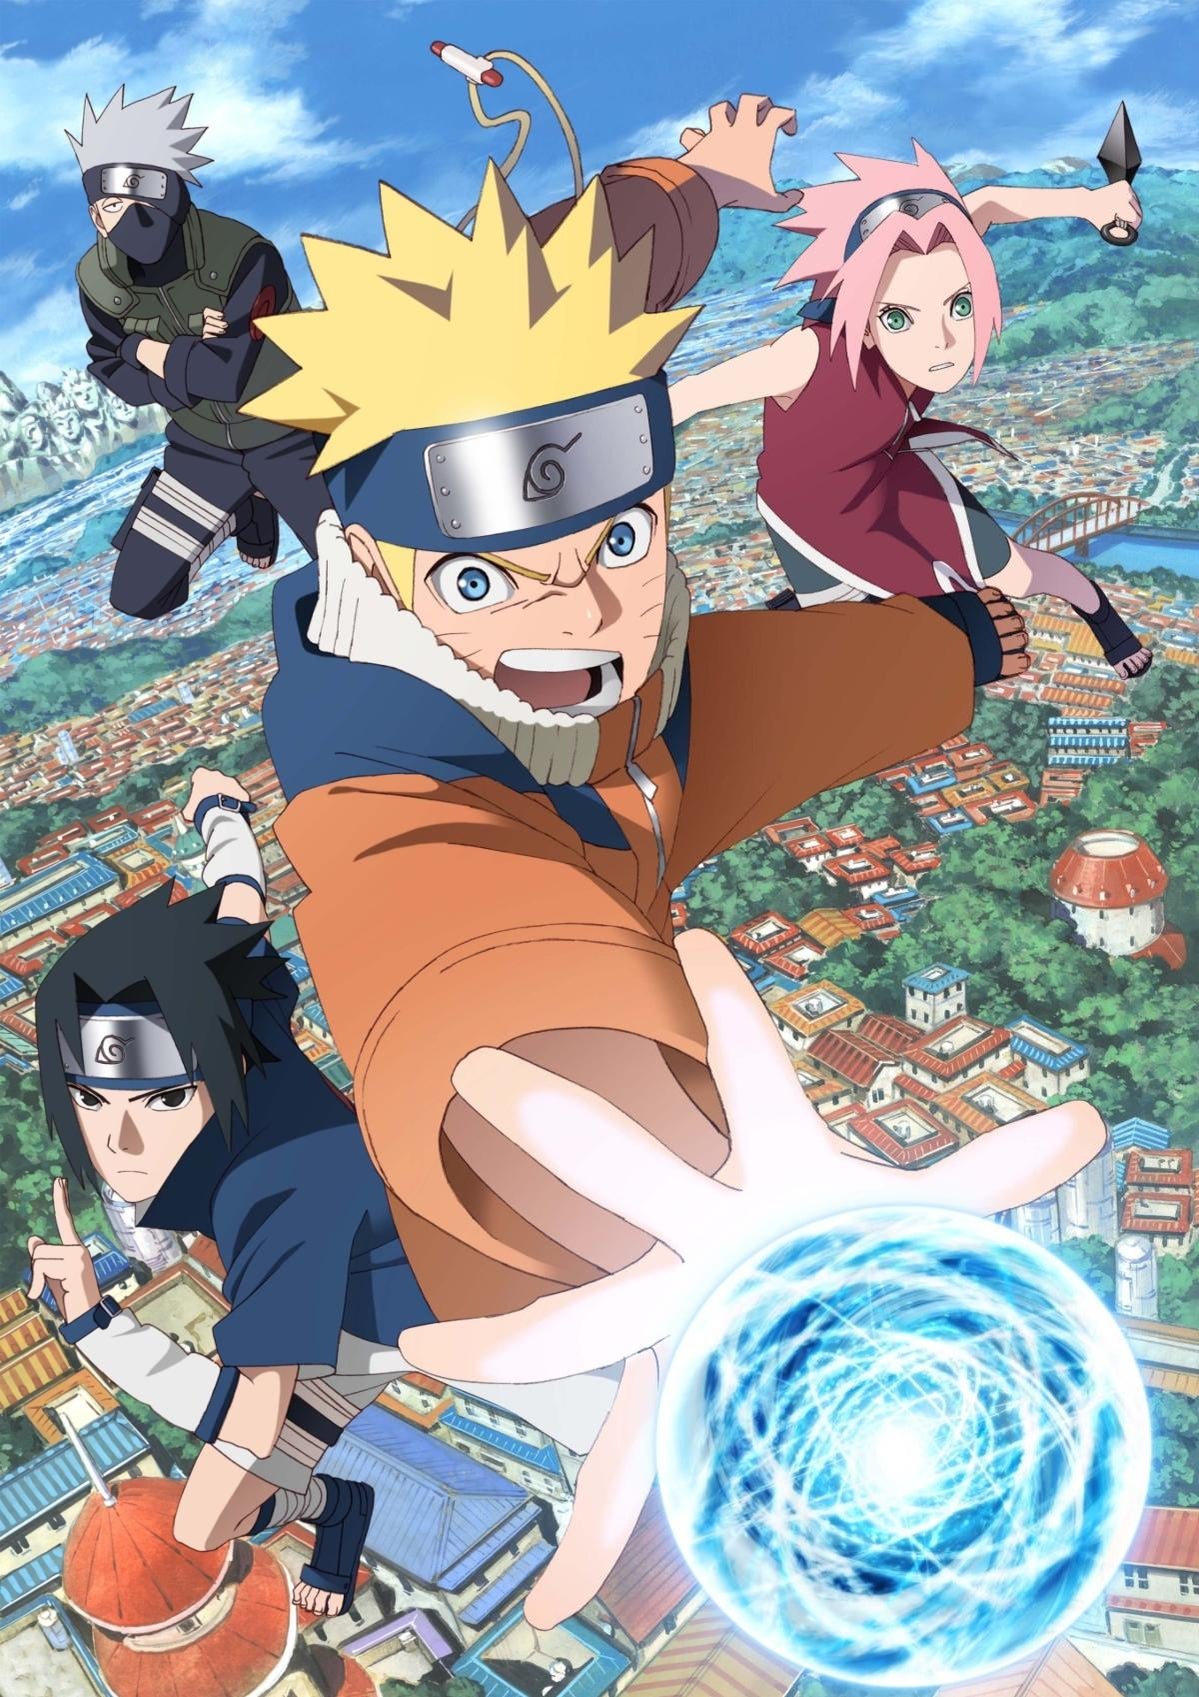 Naruto 20th anniversary episodes details